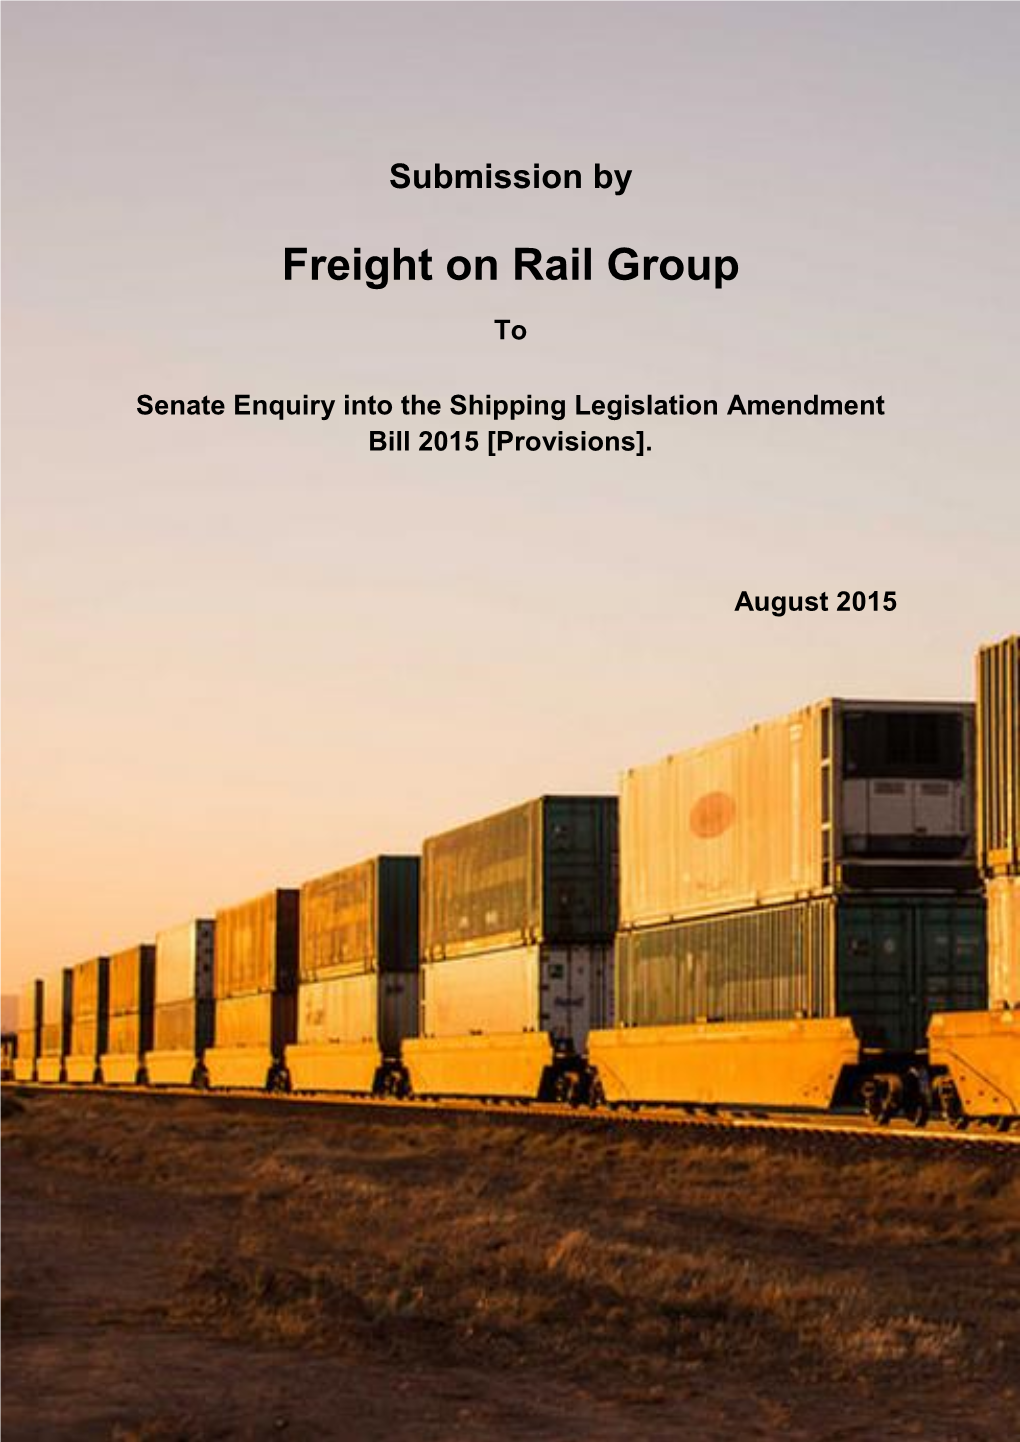 Senate Enquiry Into the Shipping Legislation Amendment Bill 2015 [Provisions]